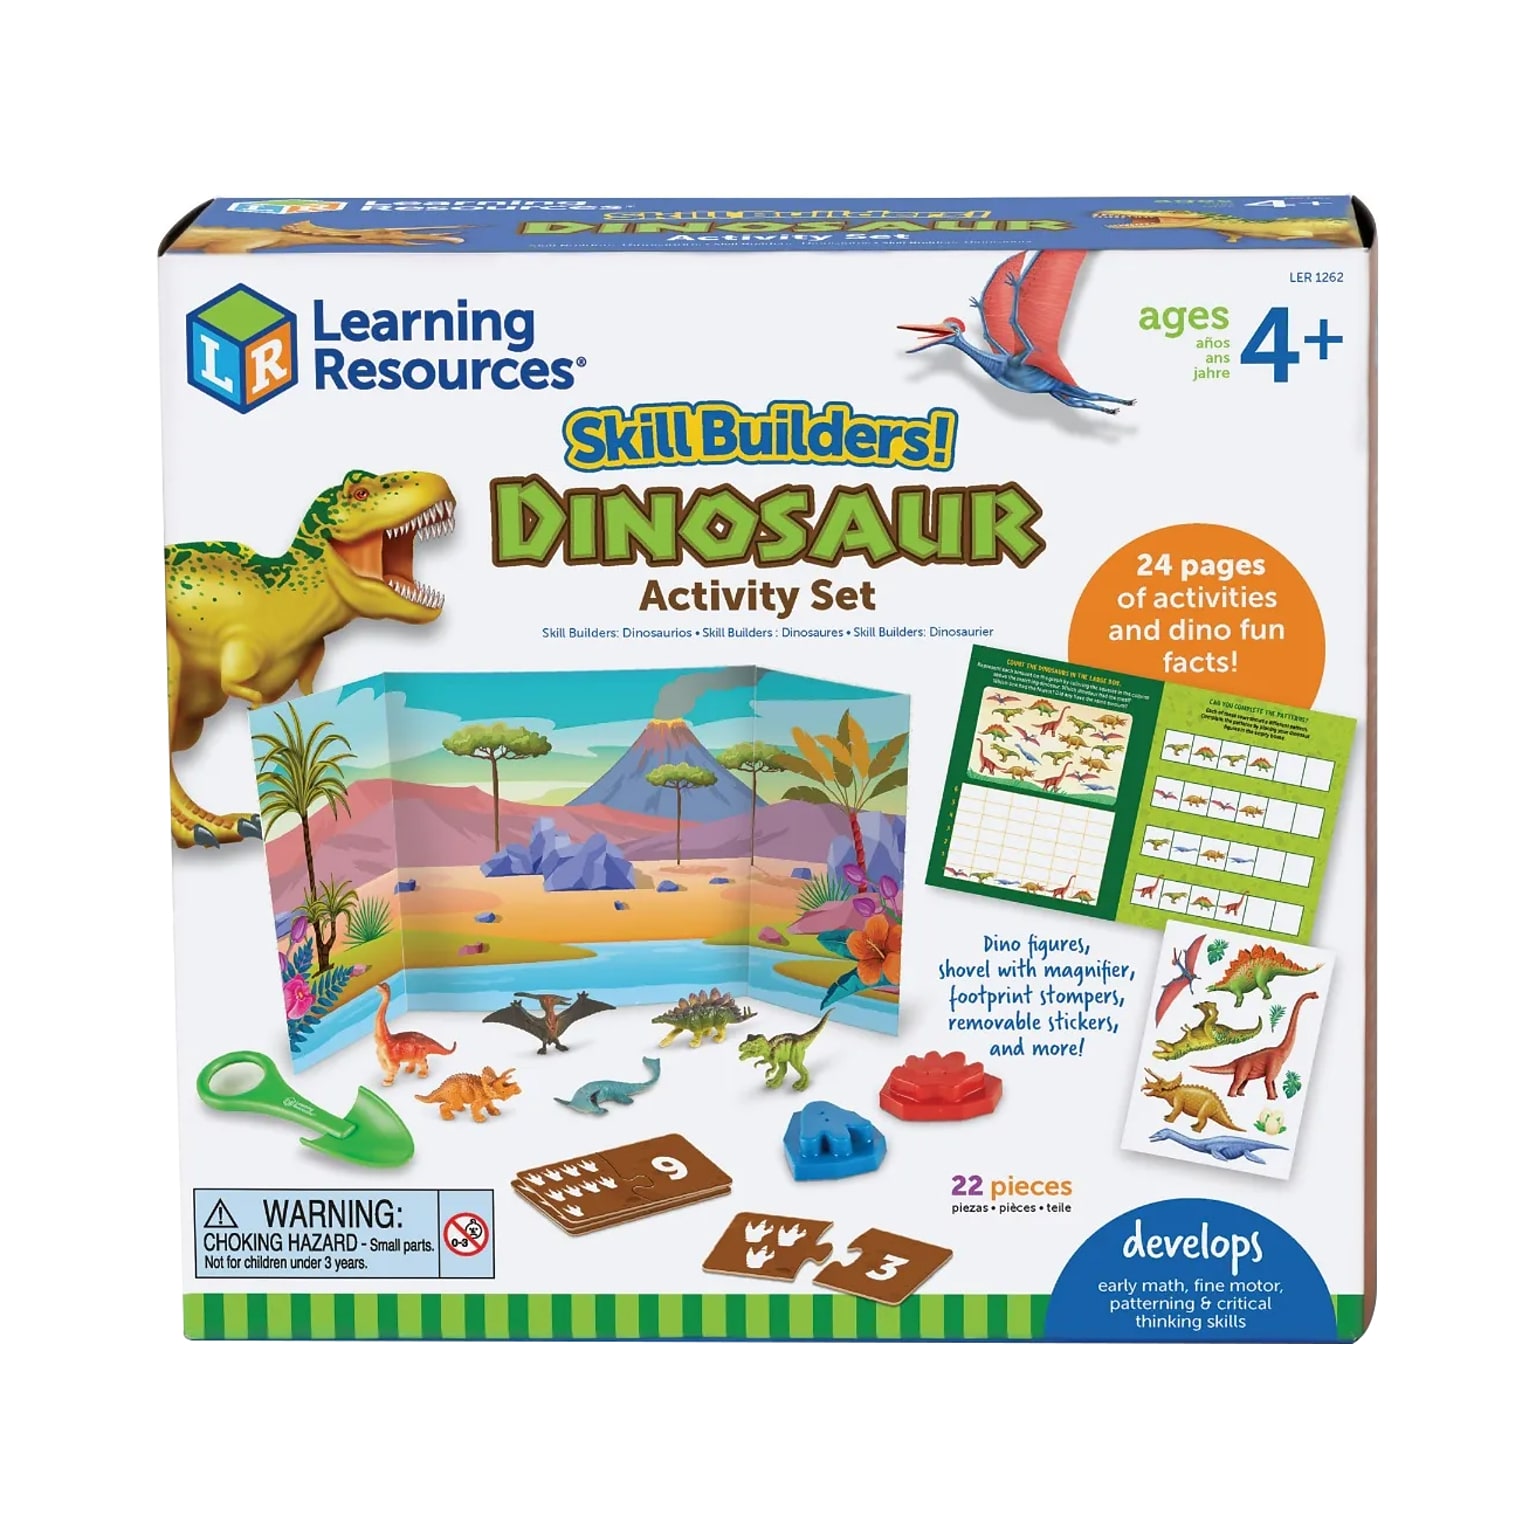 Learning Resources Skill Builders! Dinosaur Activity Set (LER1262)